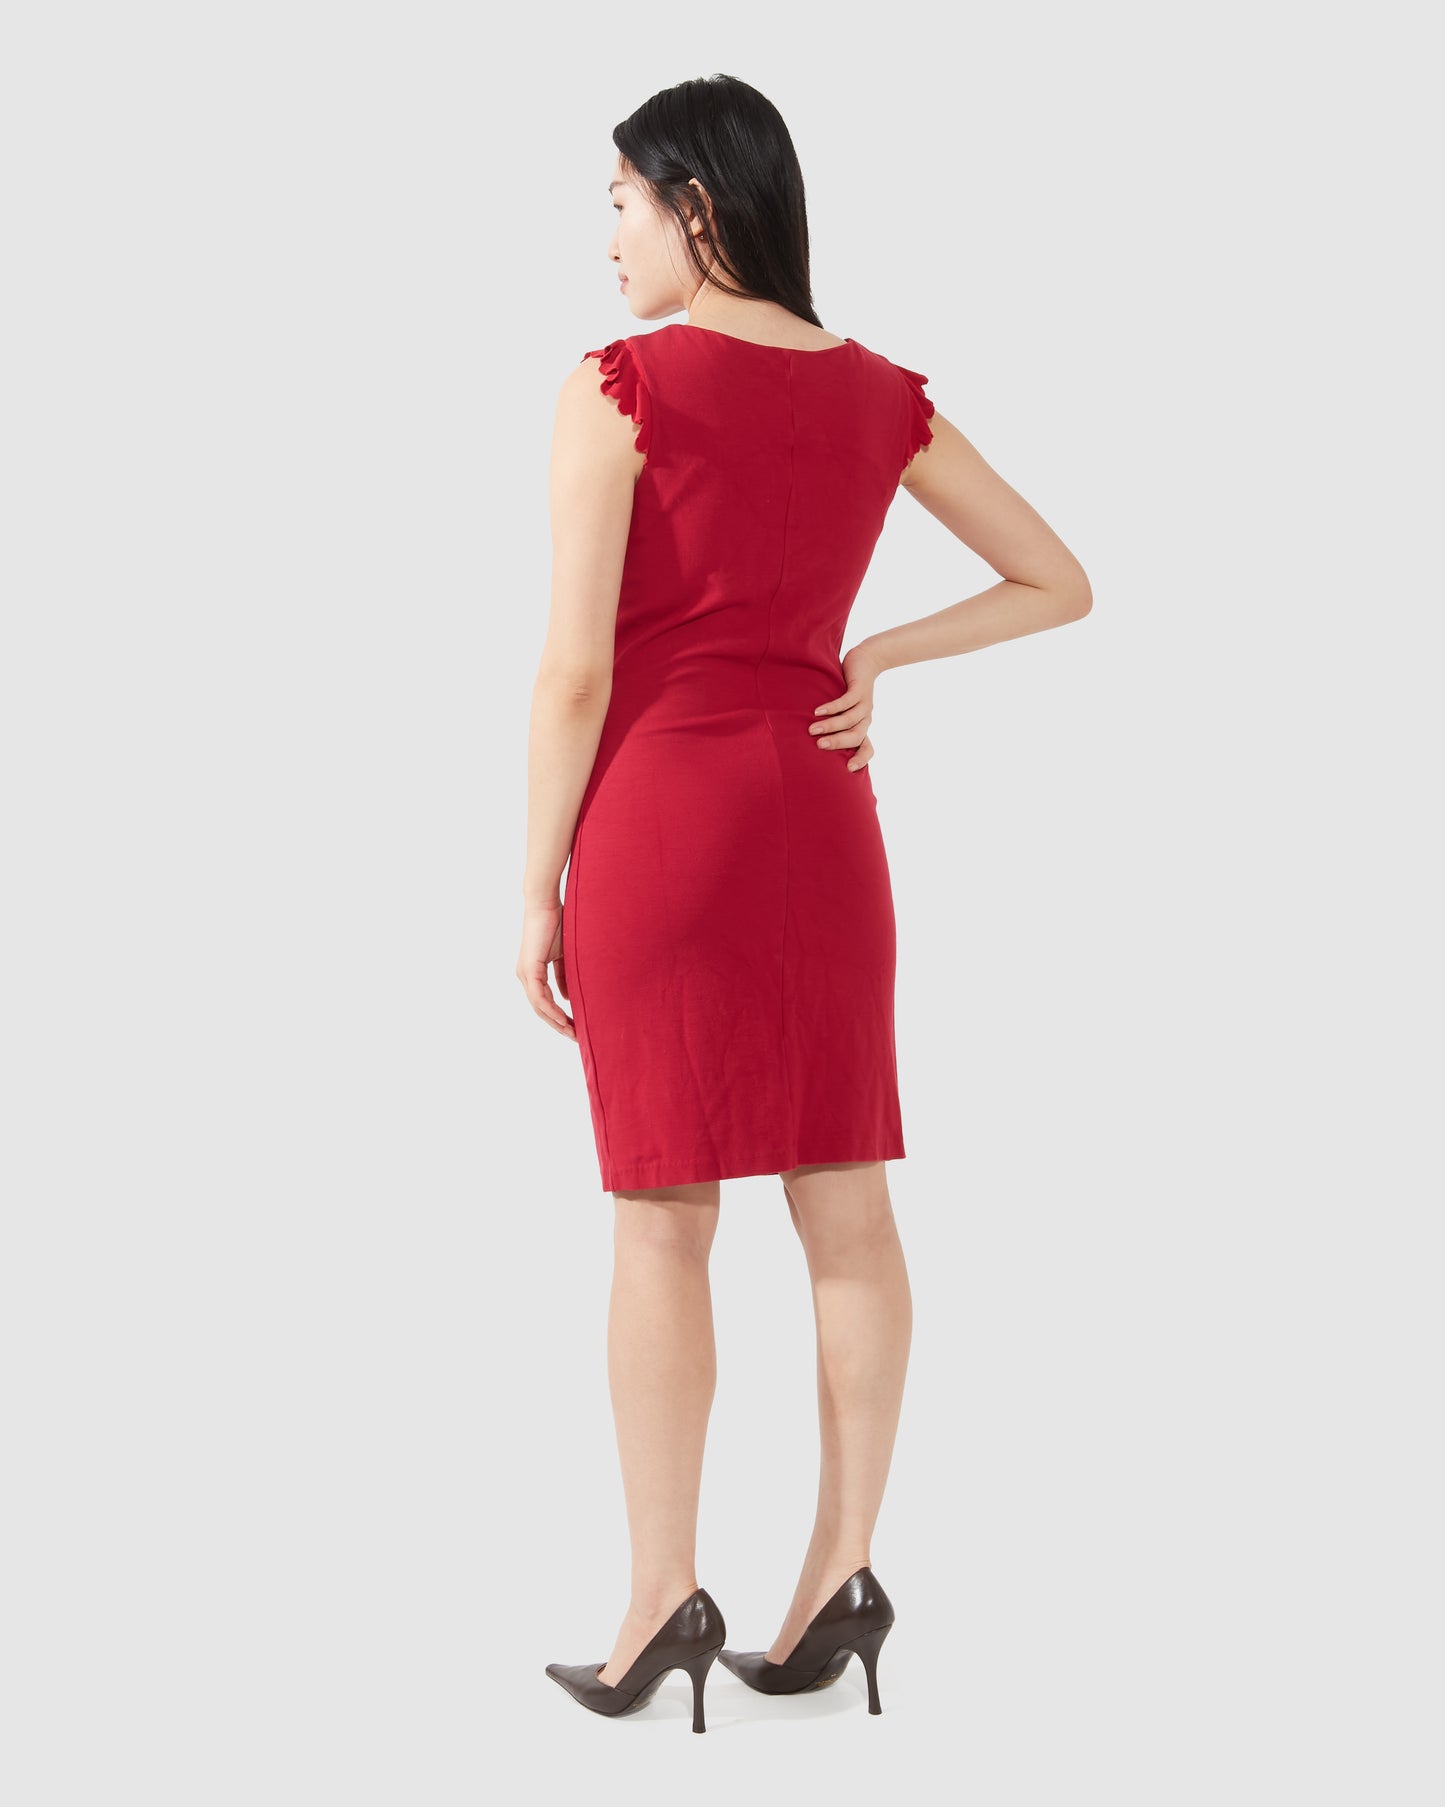 Valentino Red Frill Collar Cocktail Dress - M